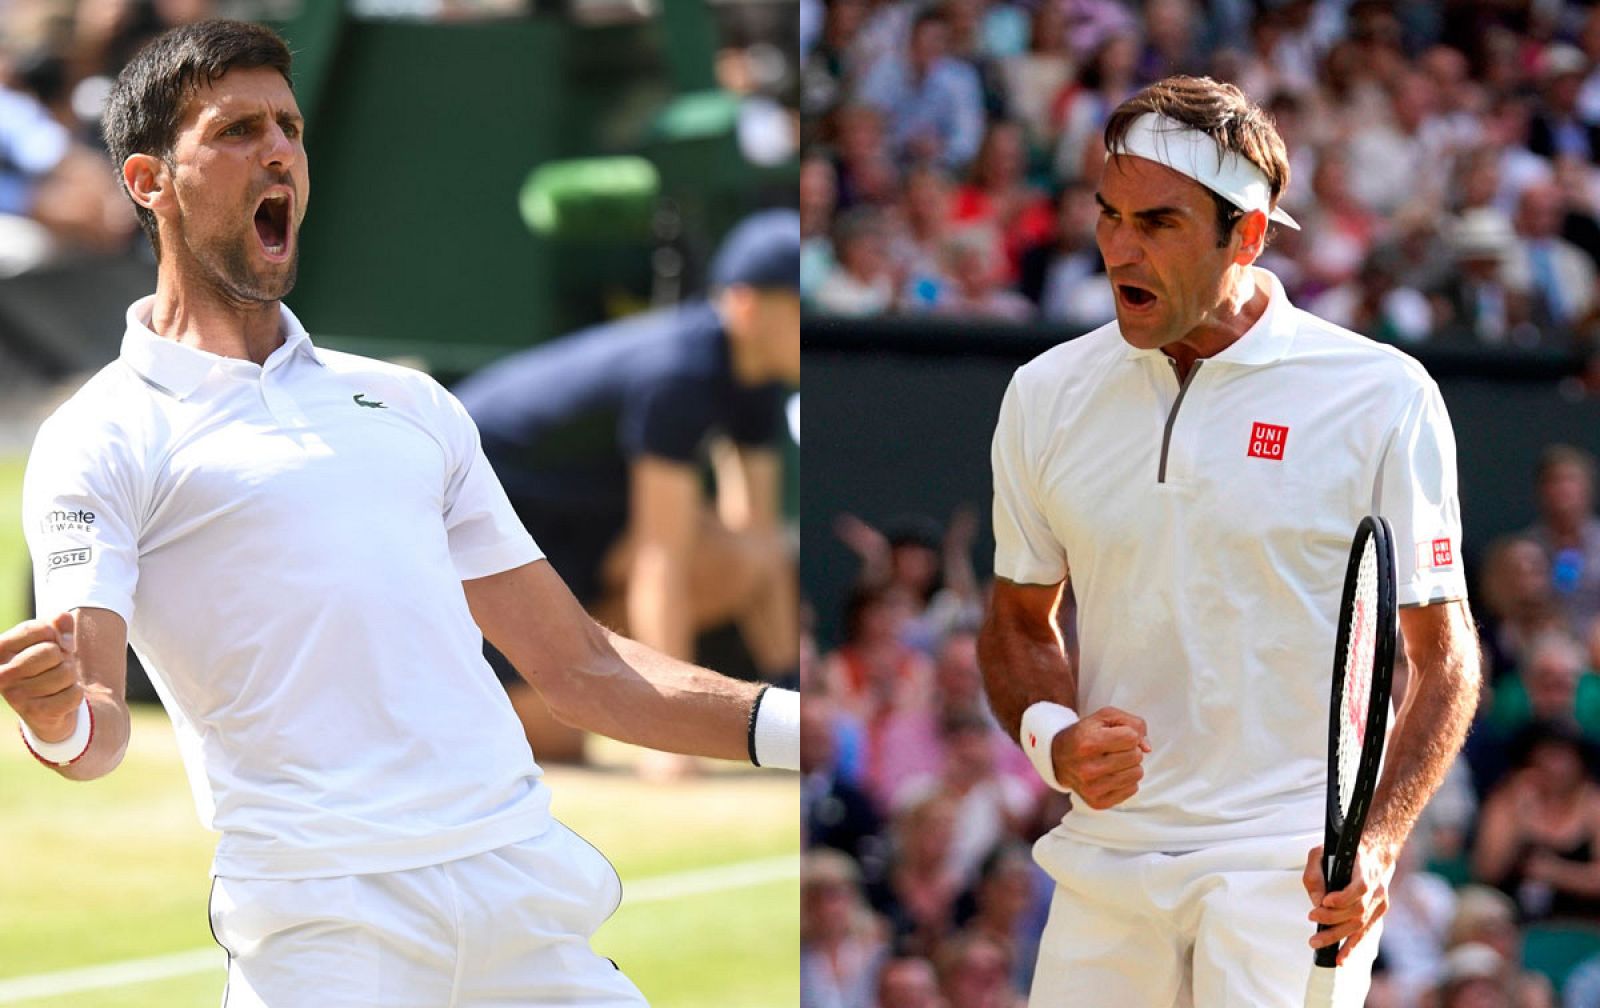 'Nole' y Federer se medirán en la final de Wimbledon 2019.